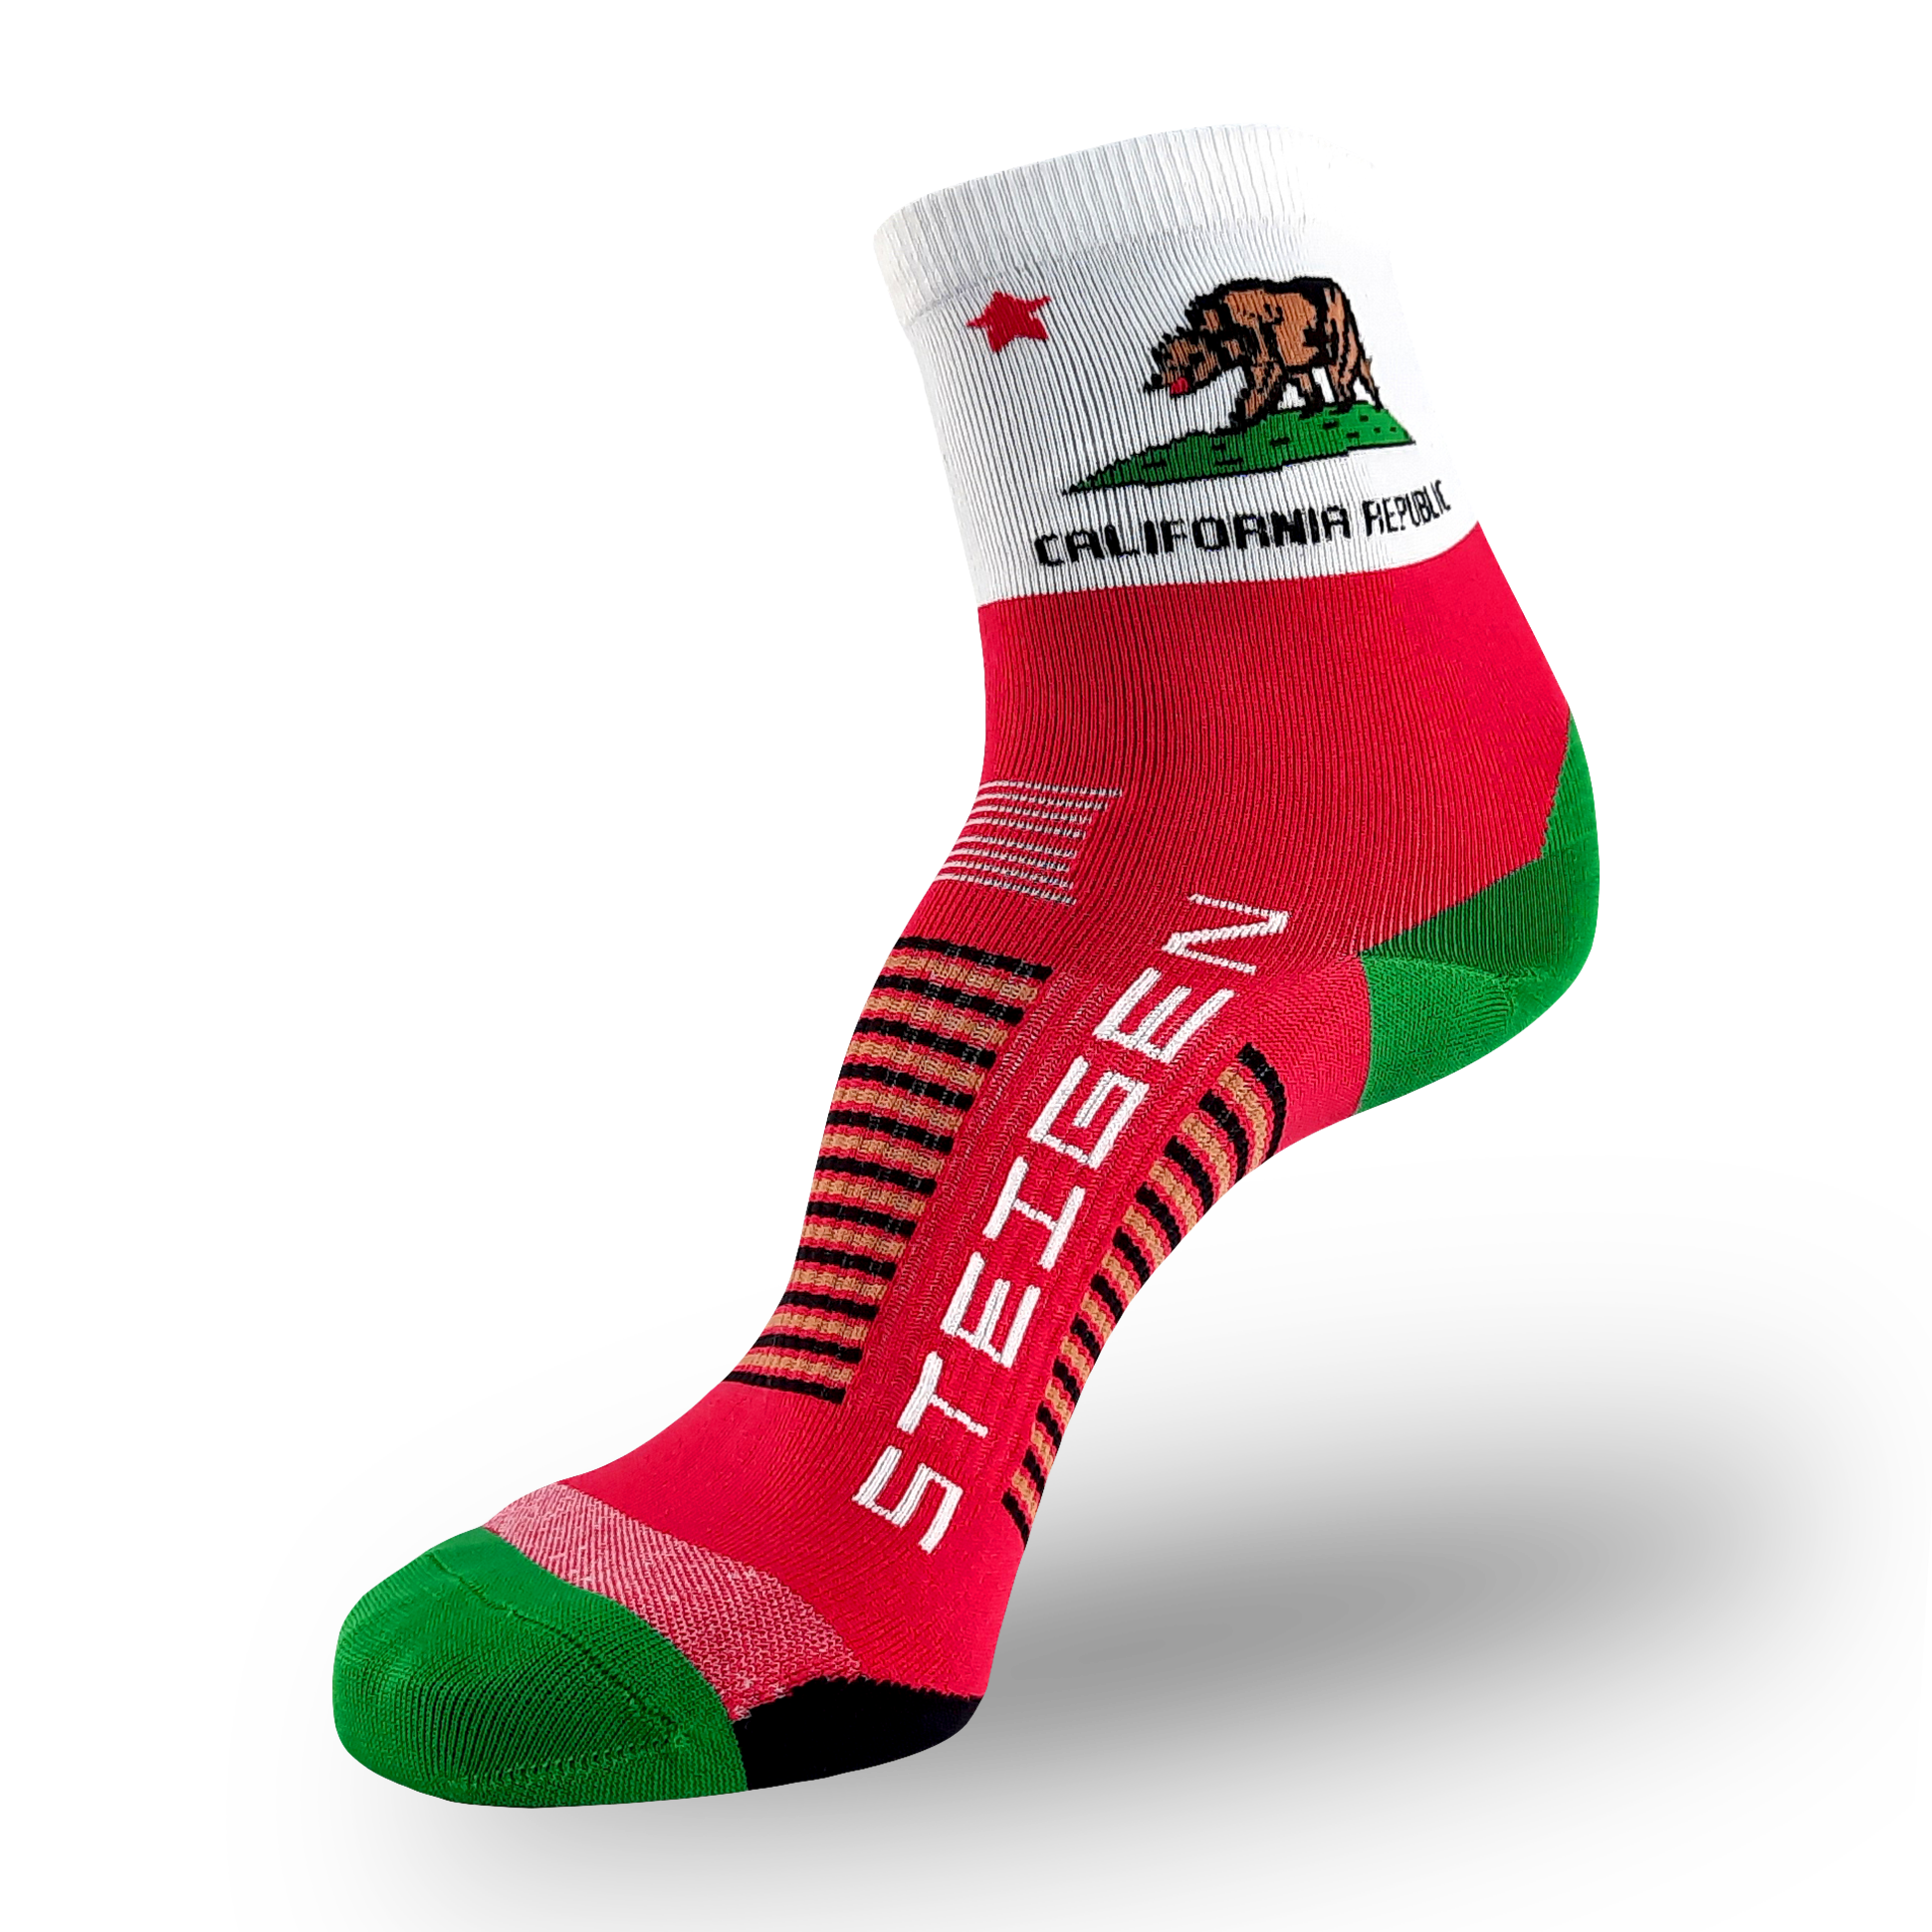 California Running Socks ½ Length